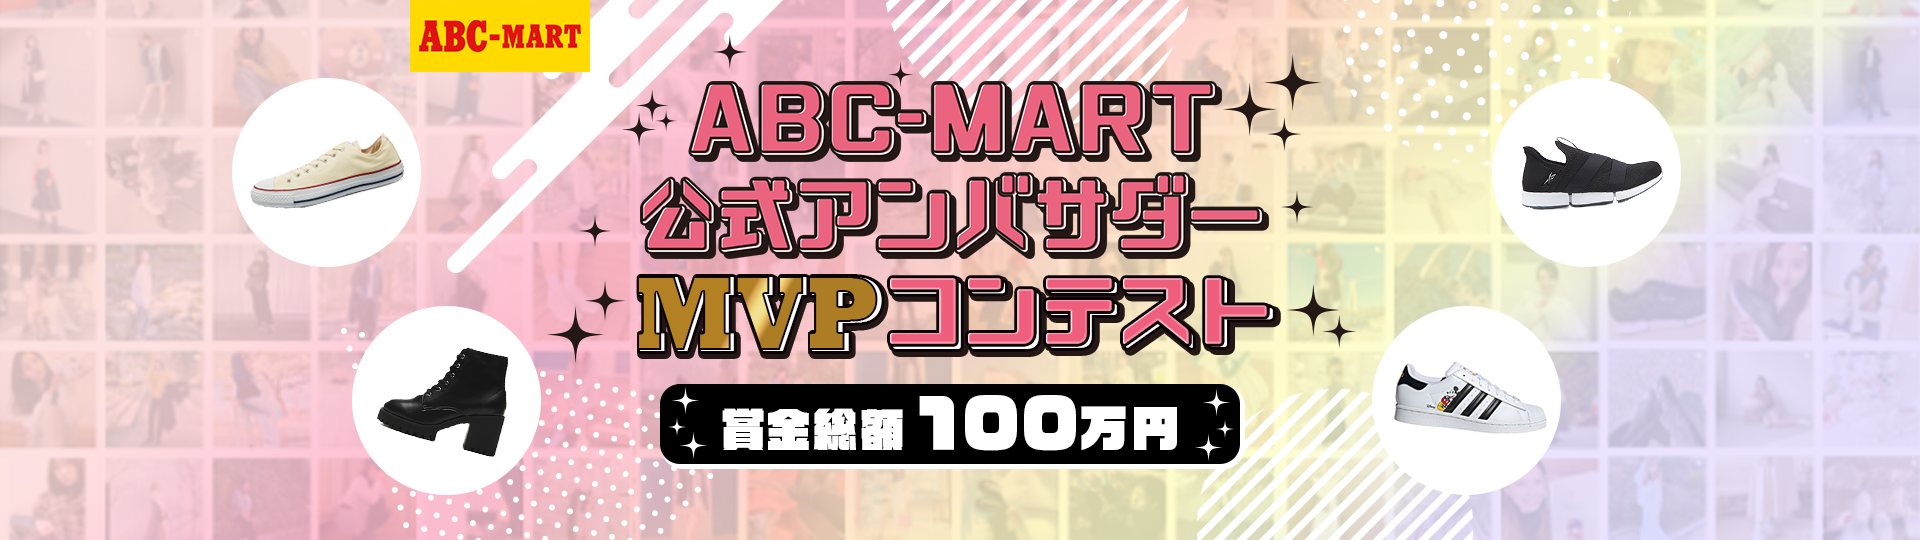 ABC-MART公式アンバサダーMVPコンテスト 賞金総額100万円